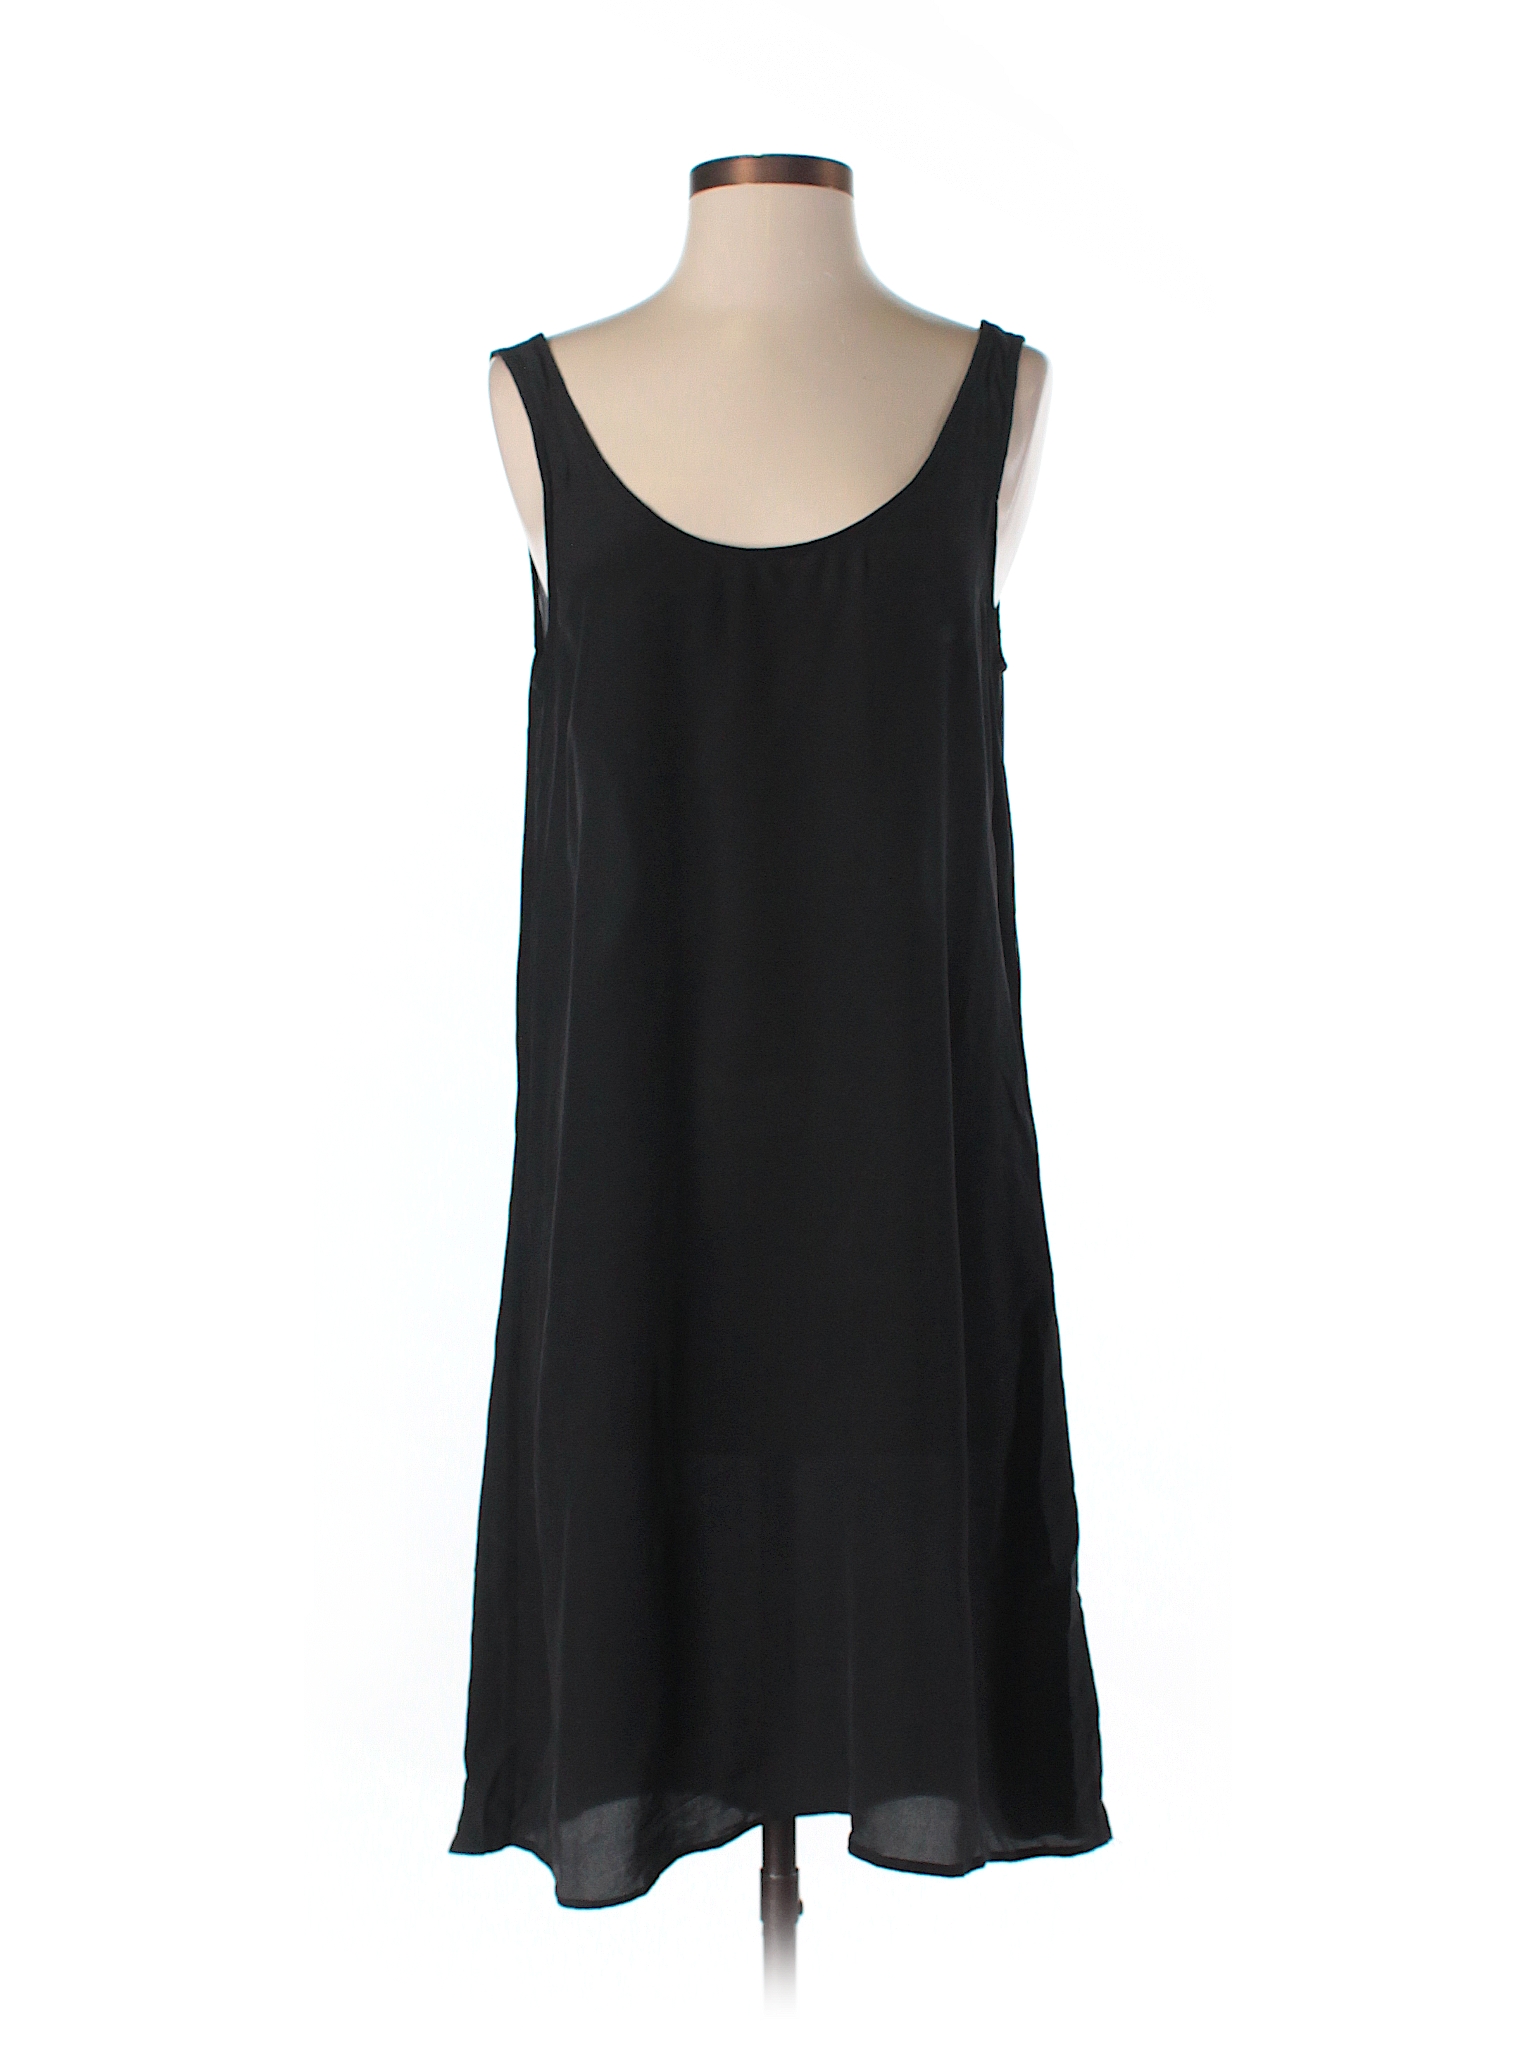 J. Crew Solid Black Casual Dress Size S - 78 % off | thredUP